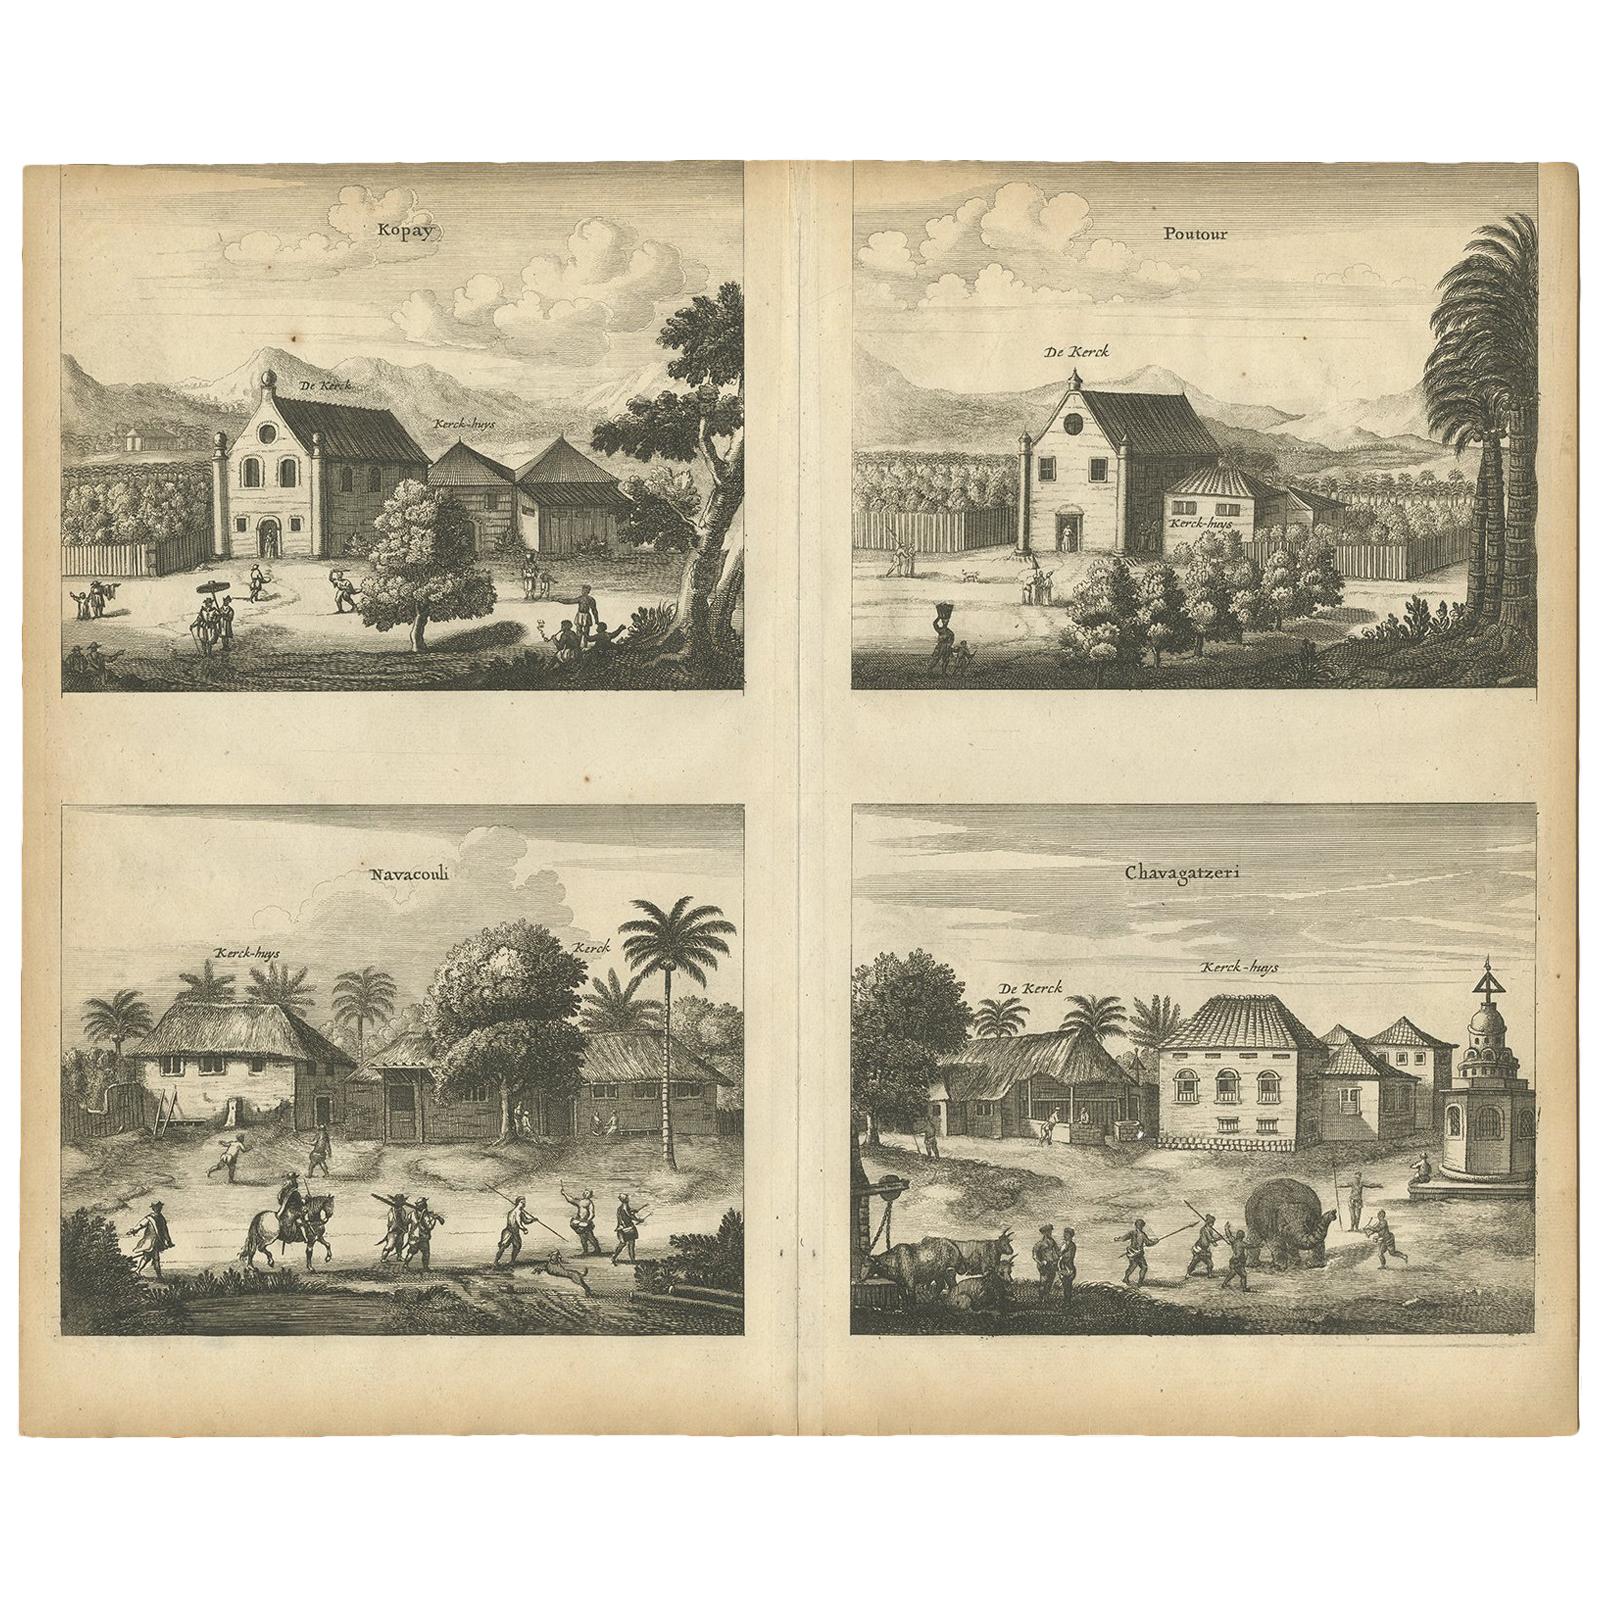 Antique Print of the Churches of Kopay, Poutour, Navacouli and Chavagatzeri